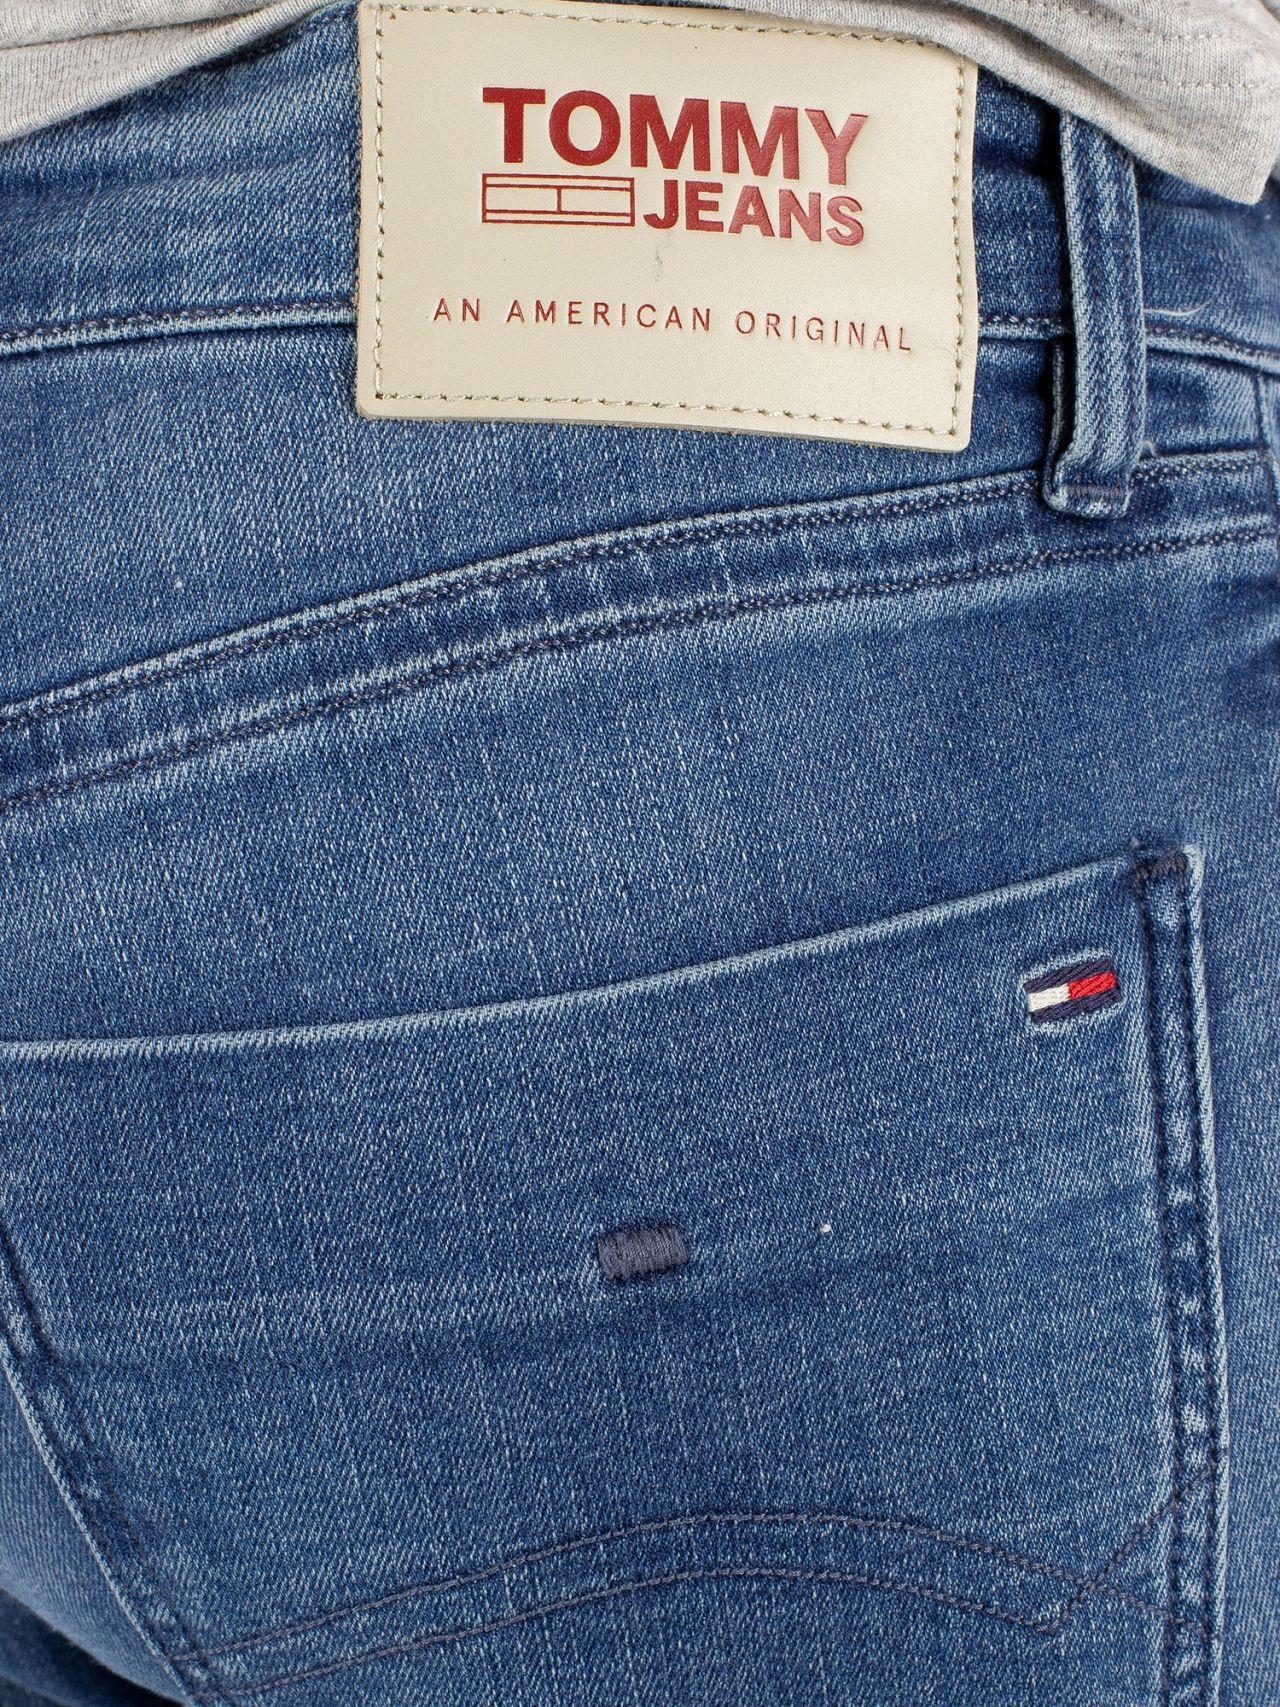 Jeans Tommy Hilfiger Scanton Dynamic Stretch Clearance, 56% OFF |  www.logistica360.pe